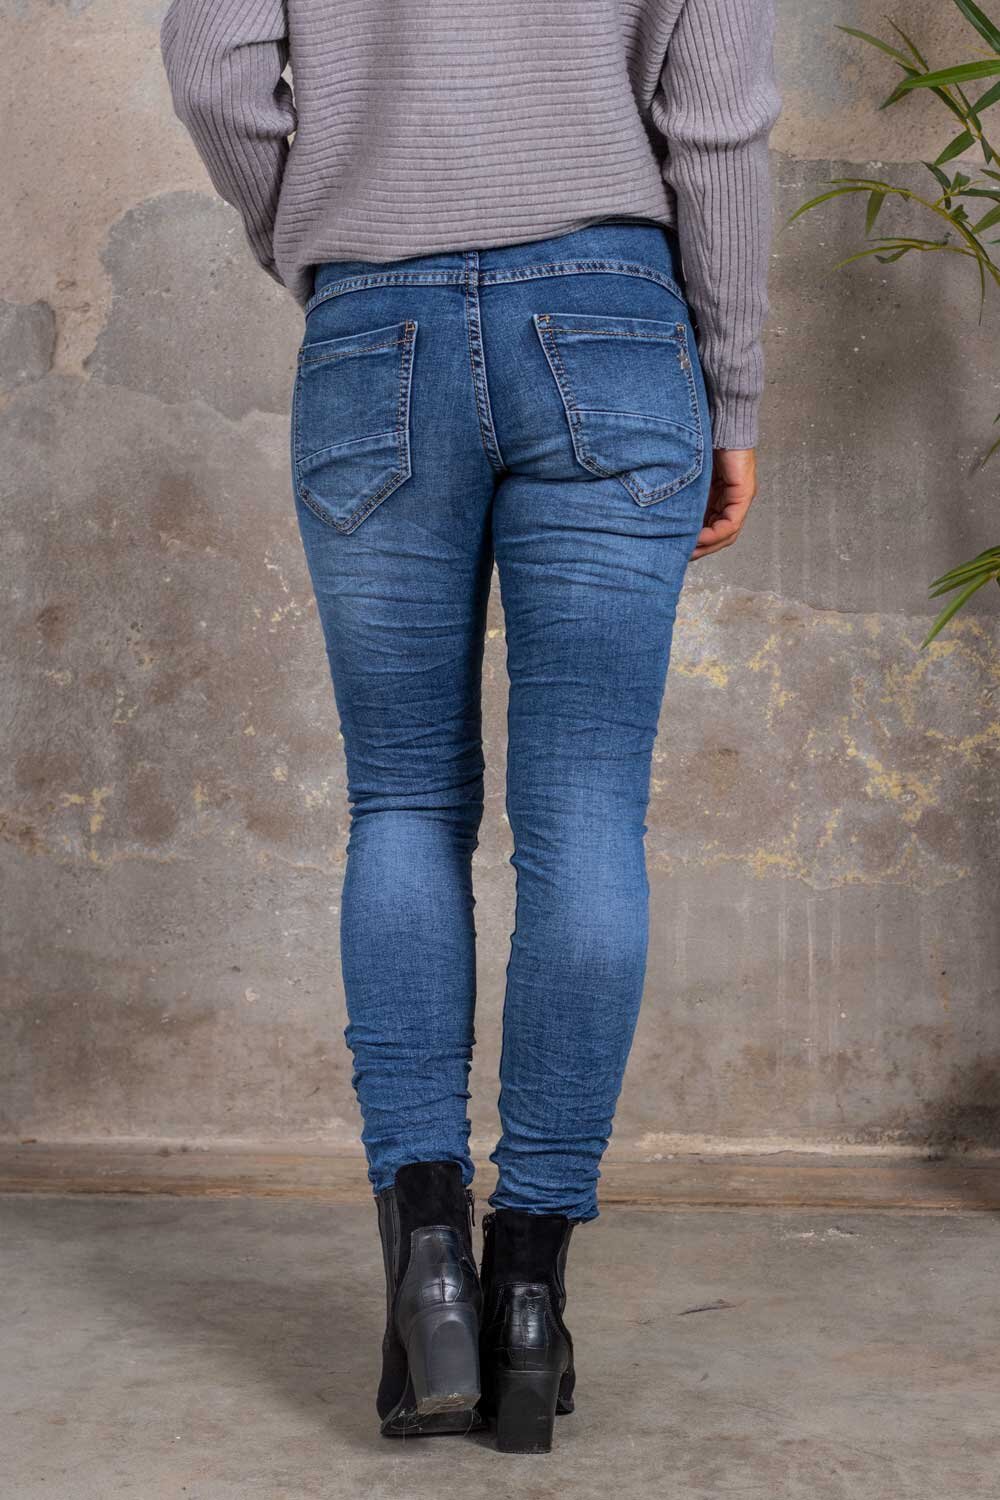 Jeans JW22204 - Knappmix - Denim